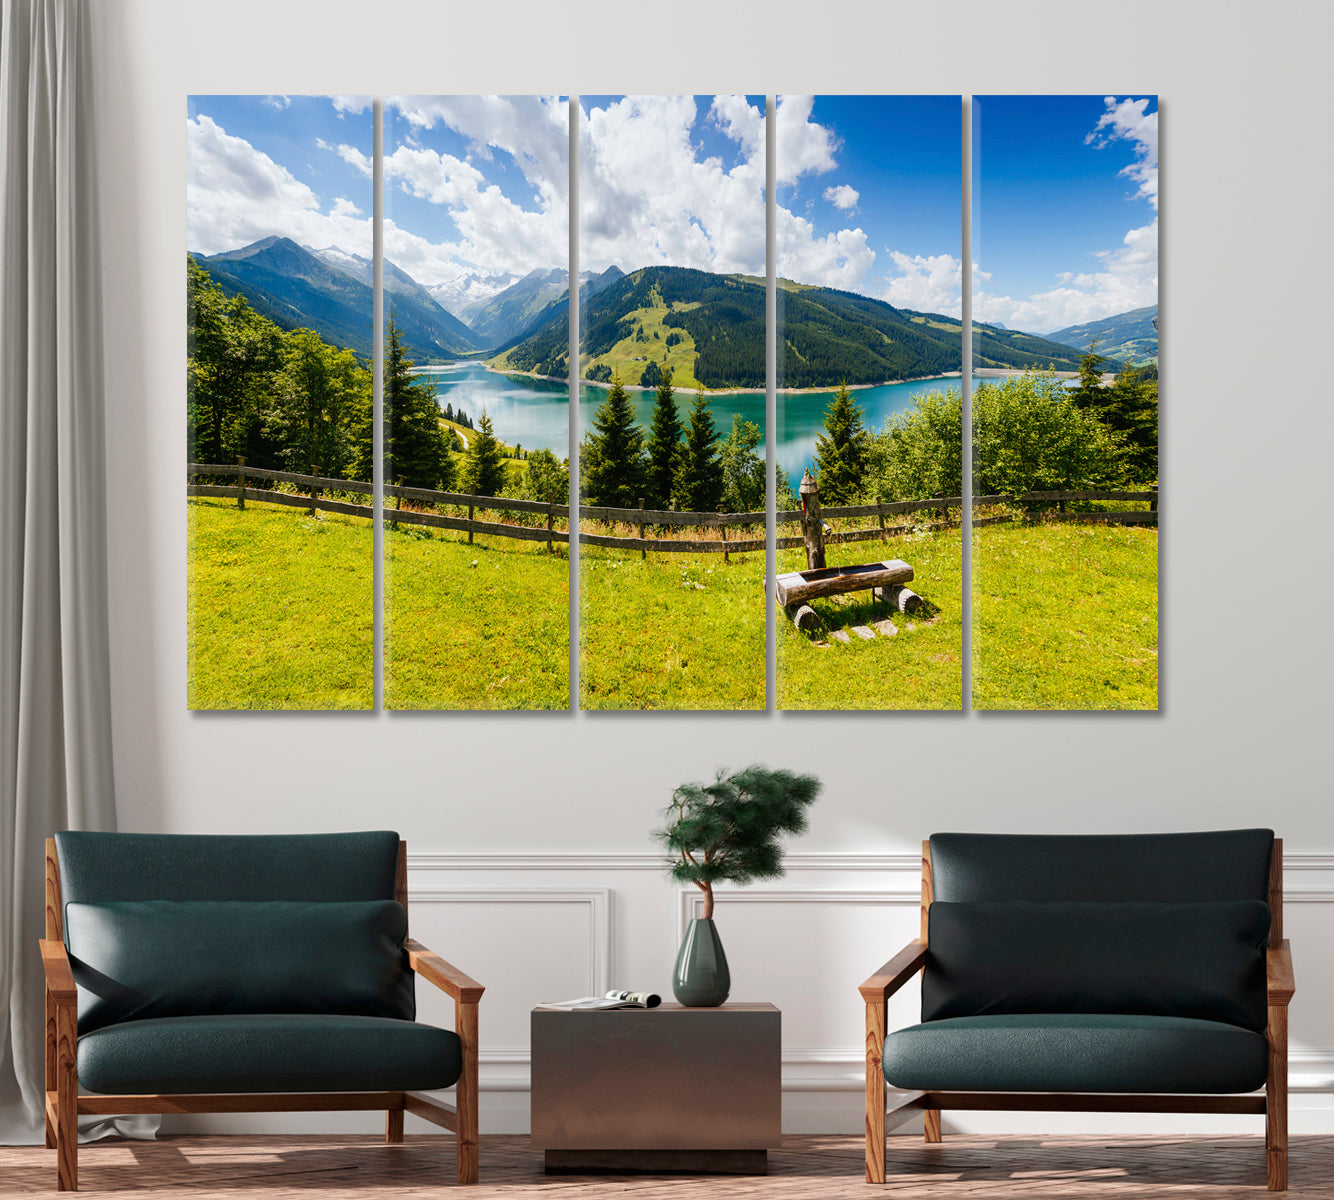 Hohe Tauern National Park Austria Canvas Print-Canvas Print-CetArt-1 Panel-24x16 inches-CetArt